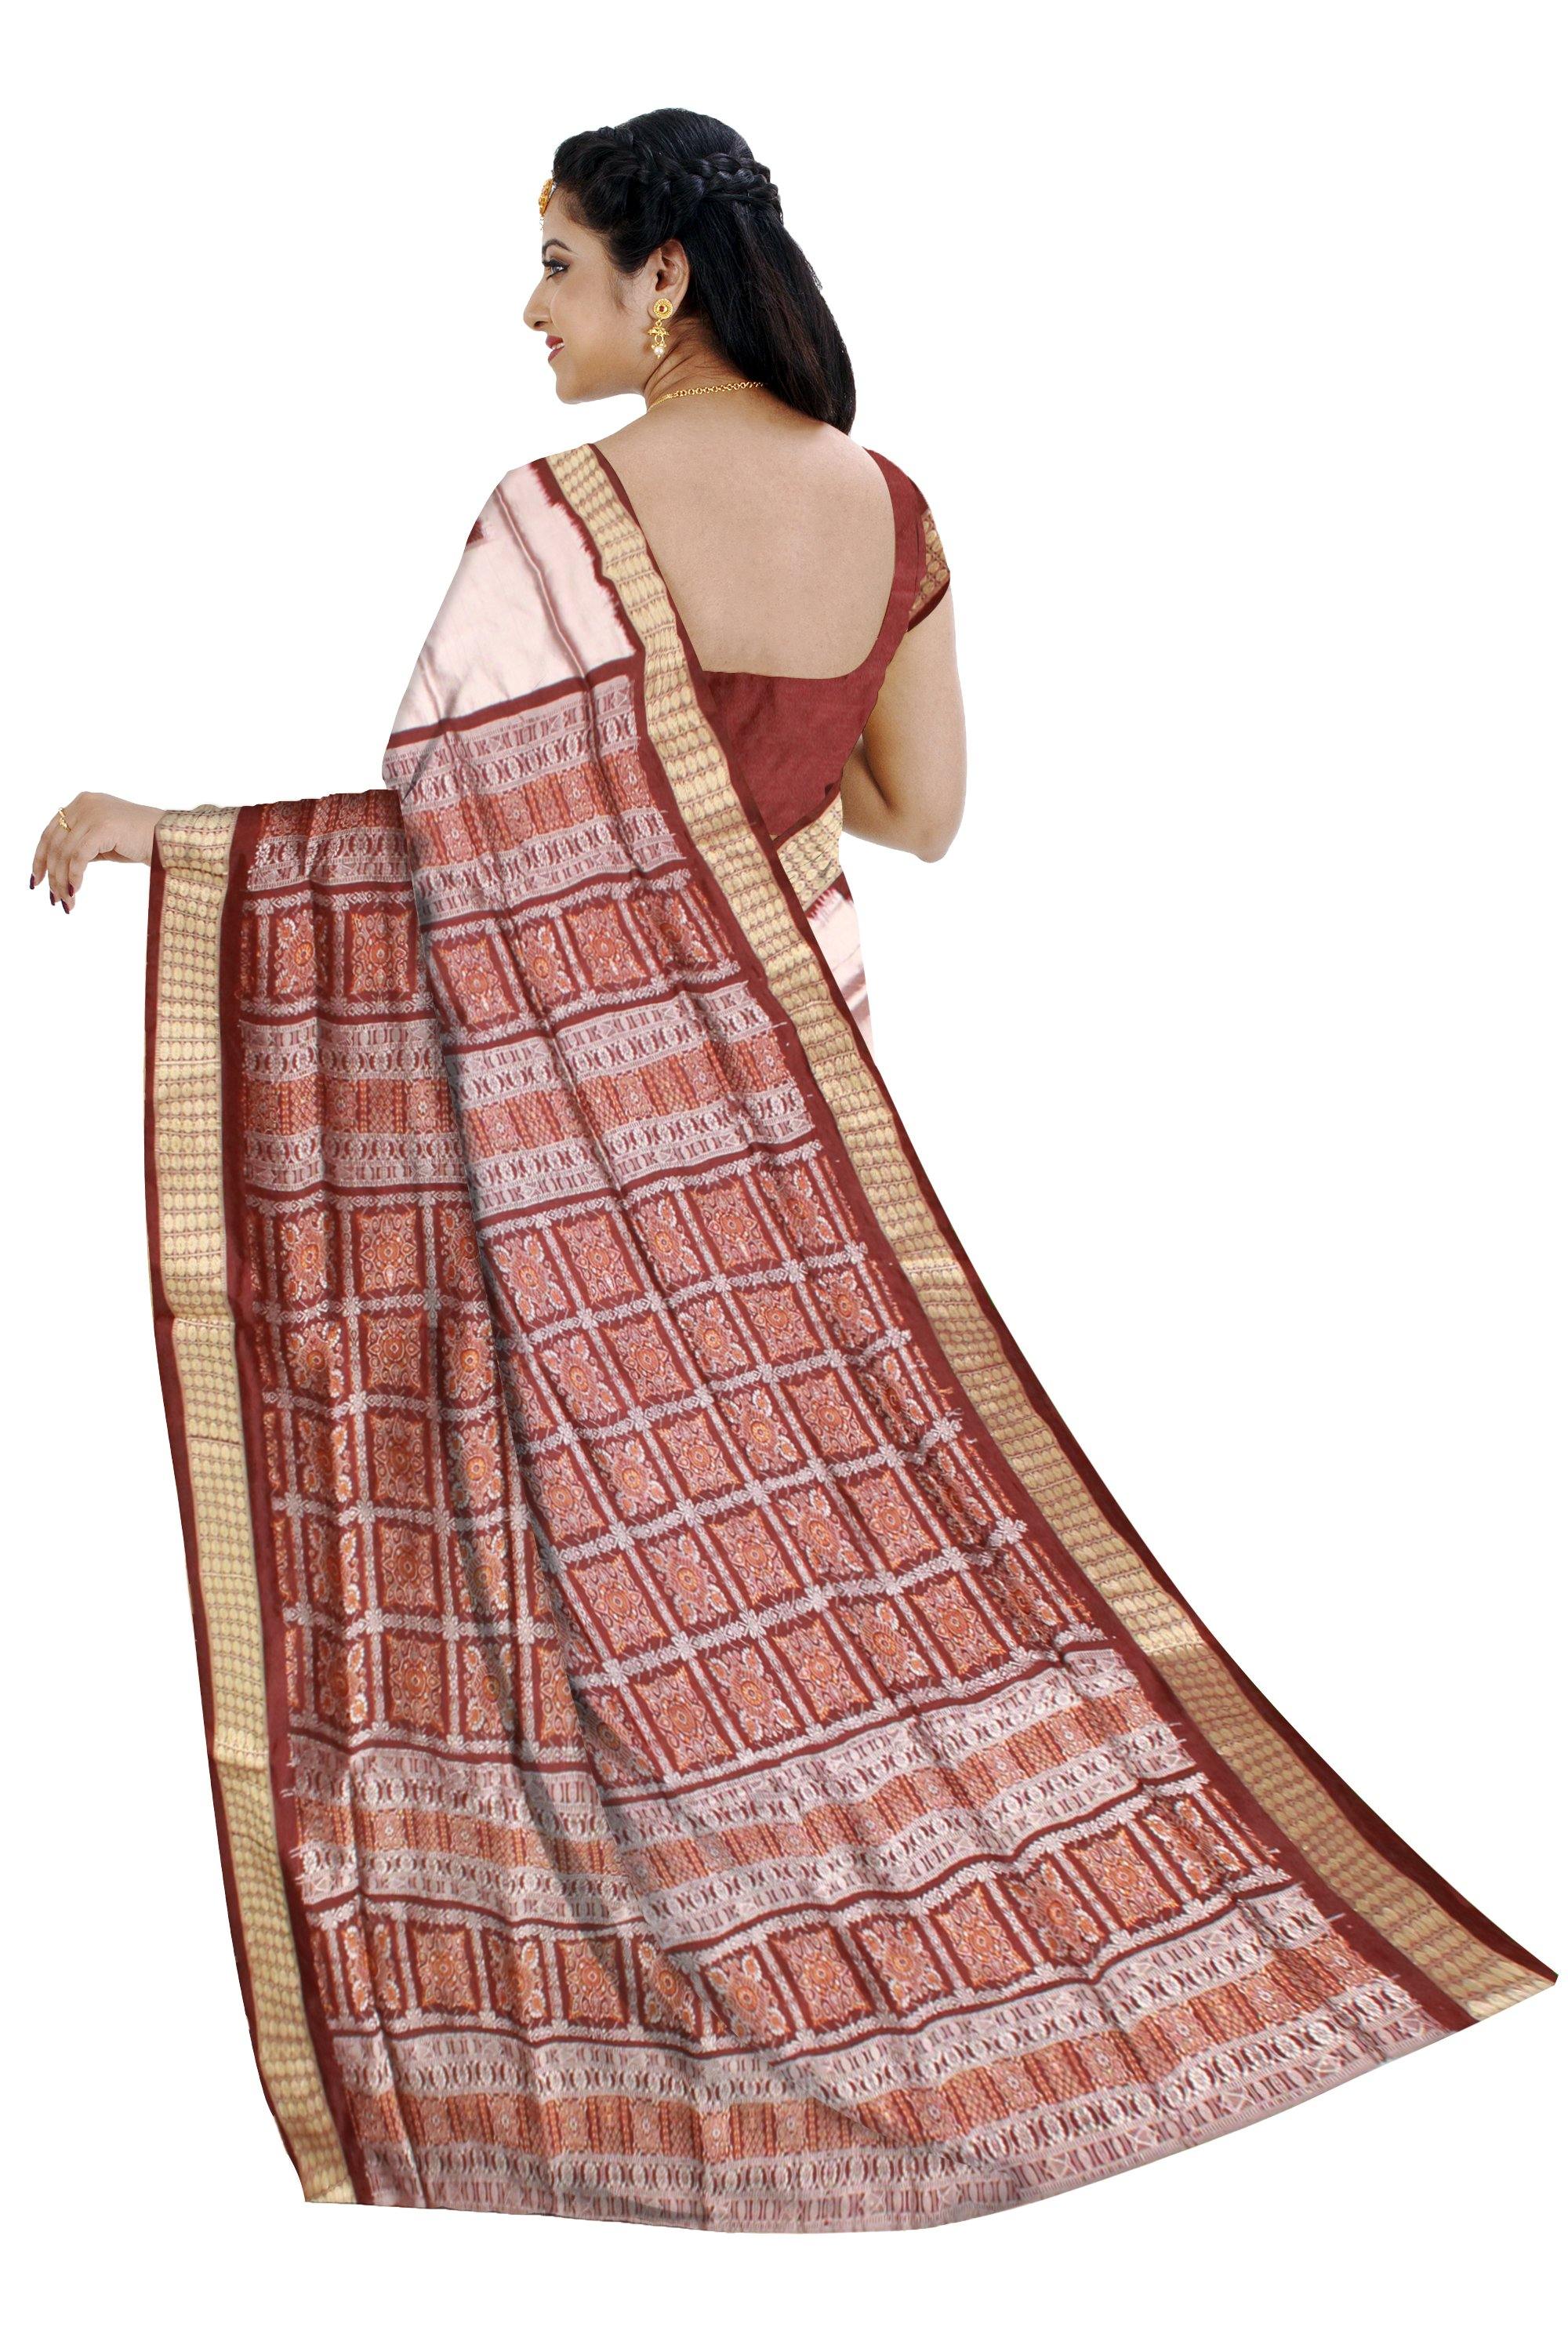 Mattha color Sambalpuri Pata saree With blouse piece. - Koshali Arts & Crafts Enterprise